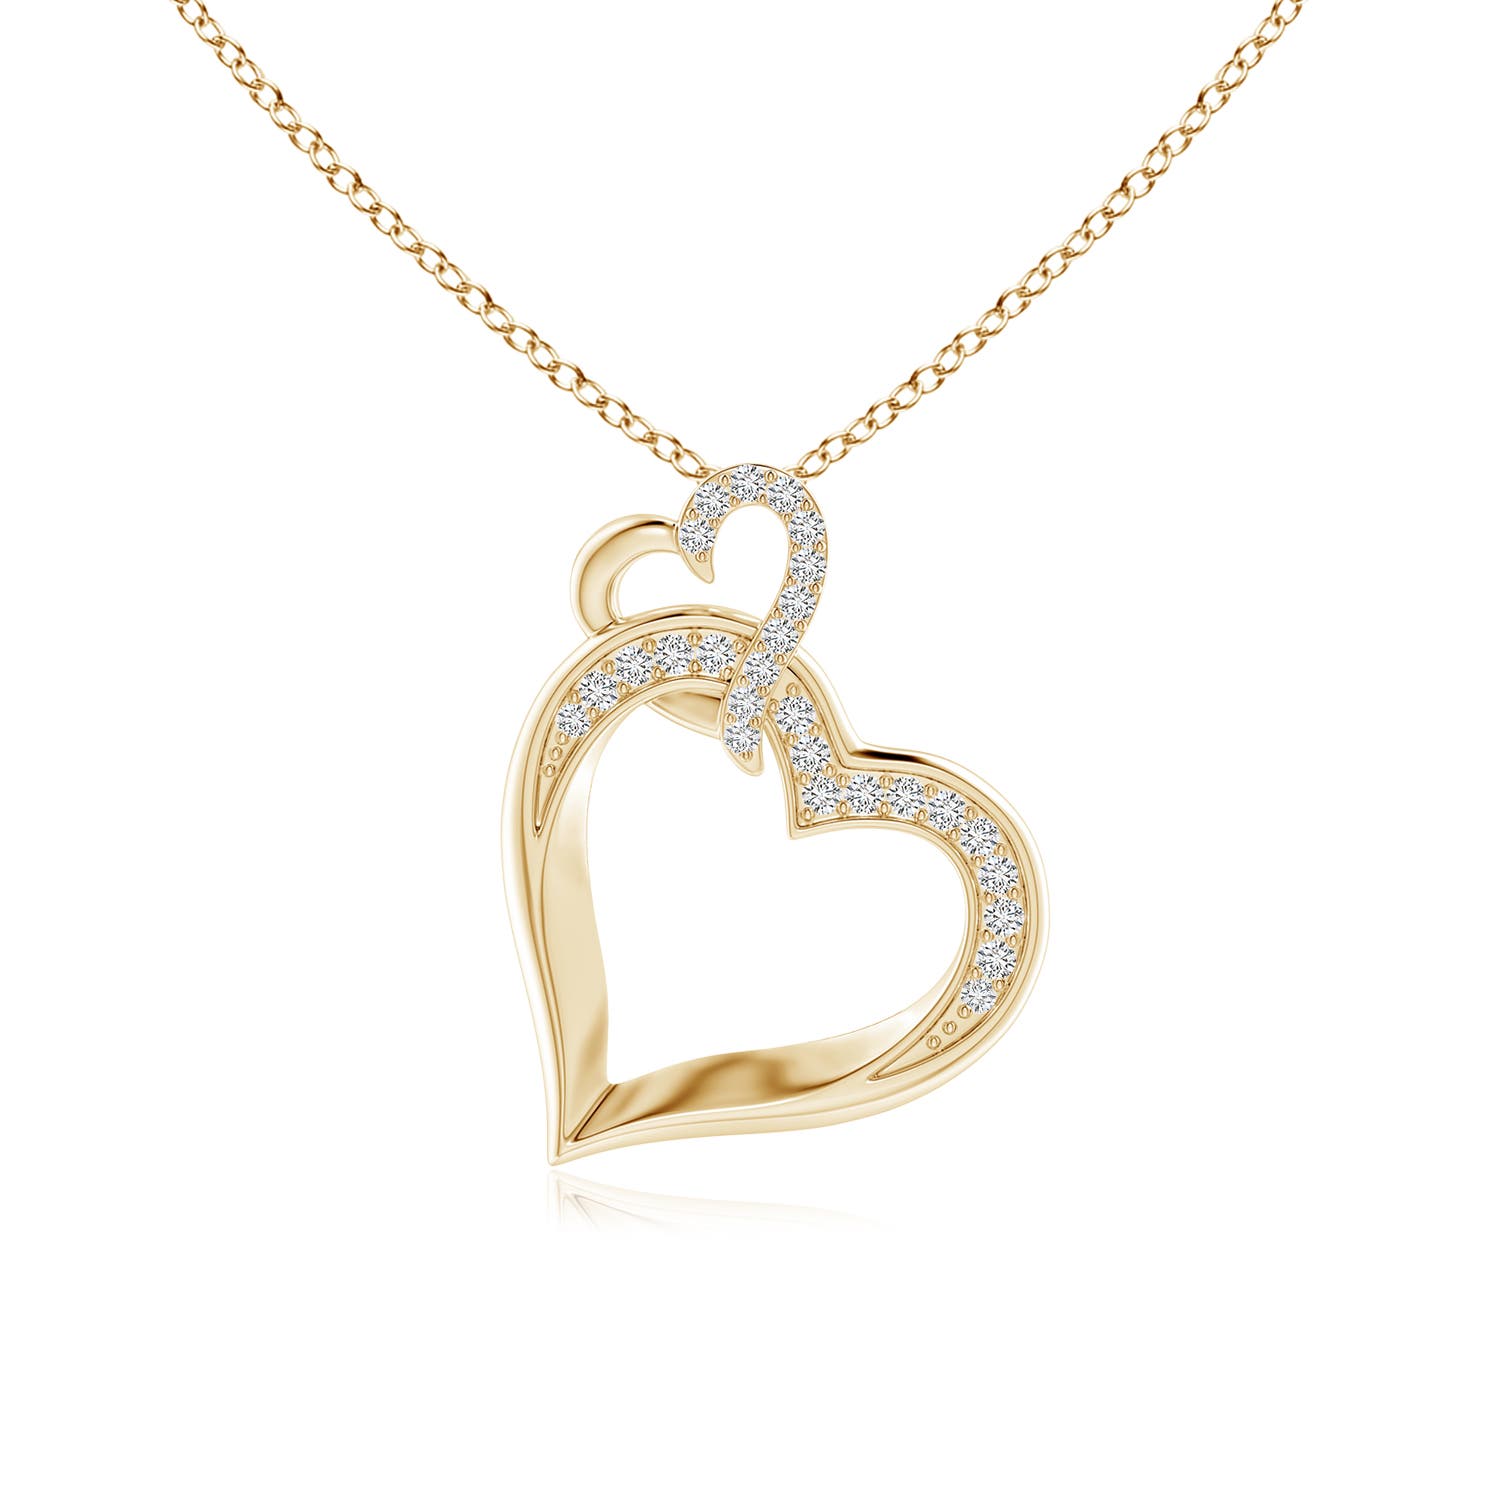 Shop Rubans Voguish Gold Toned Interlinked Necklace Chain. Online at Rubans